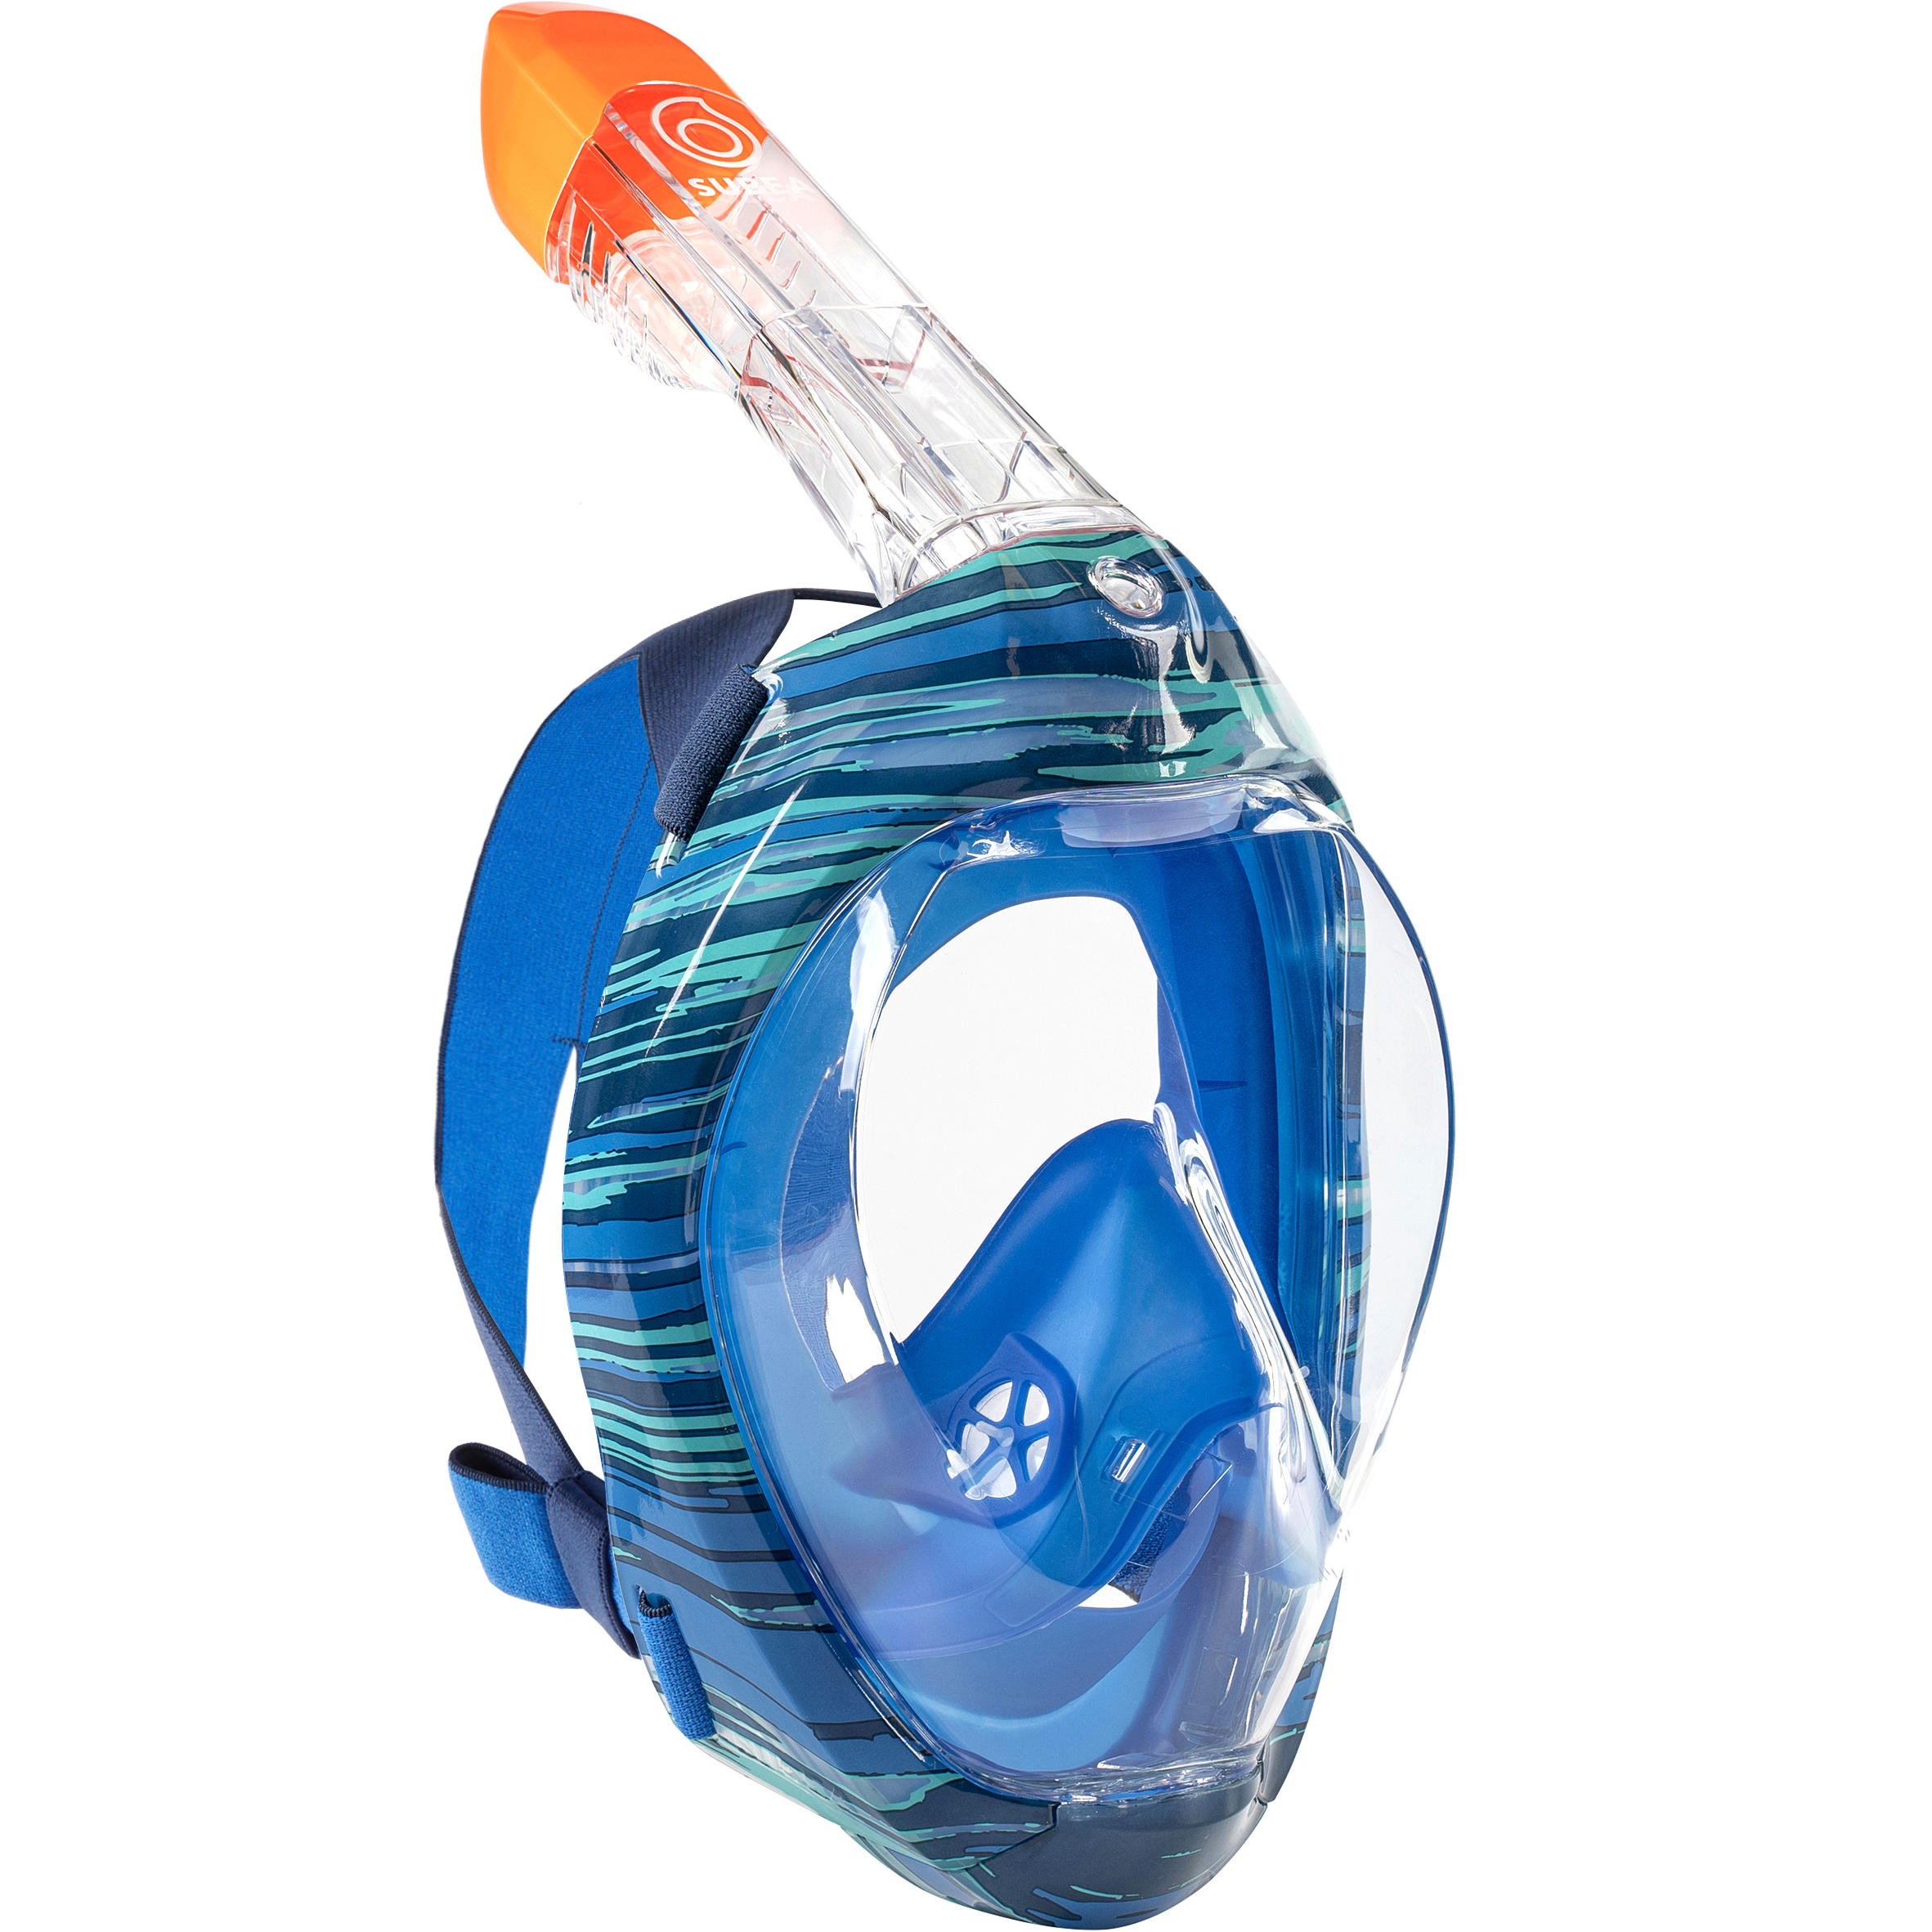 Snorkelmasker easybreath 500 swell